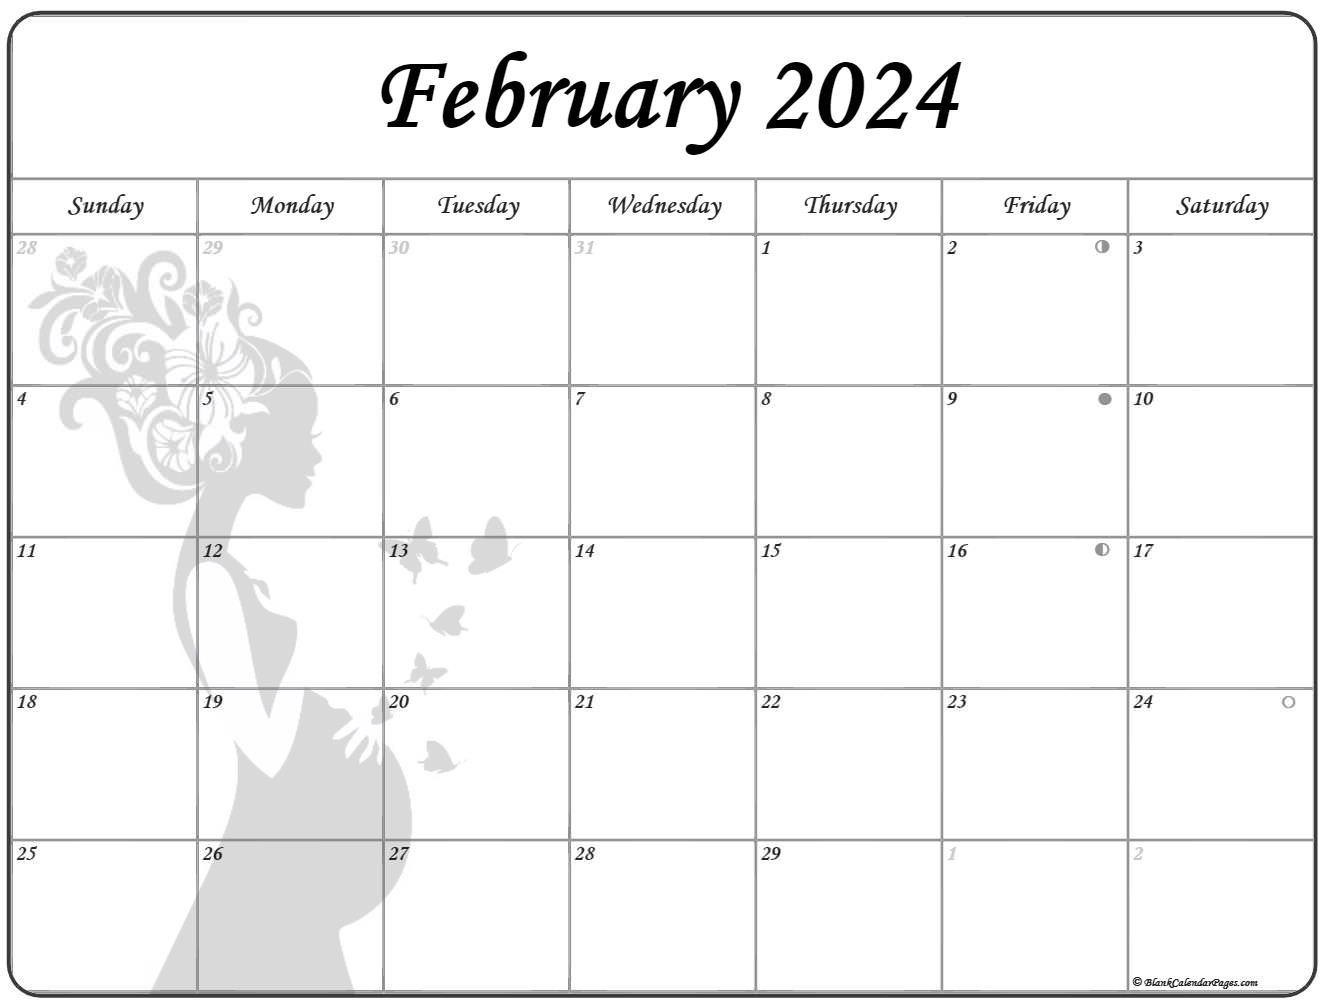 February 2020 Pregnancy Calendar | Fertility Calendar